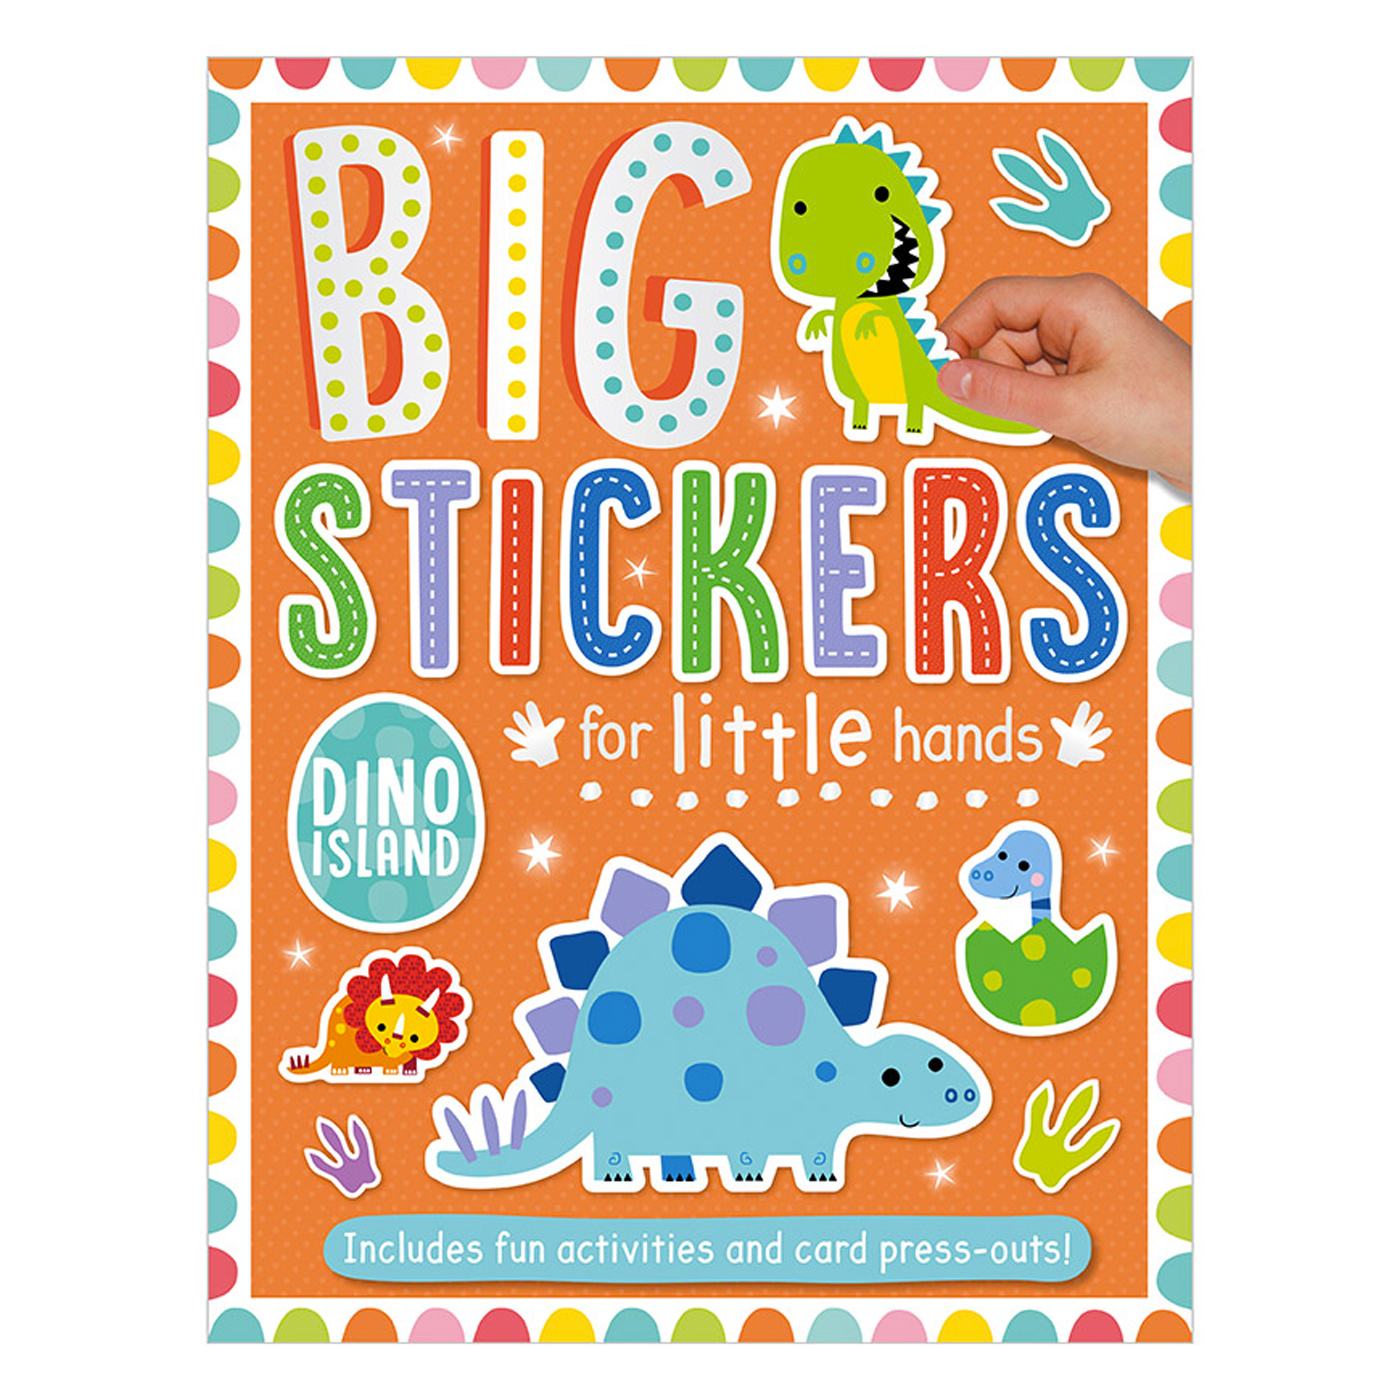  Big Stickers for Little Hands Dinosaur Island